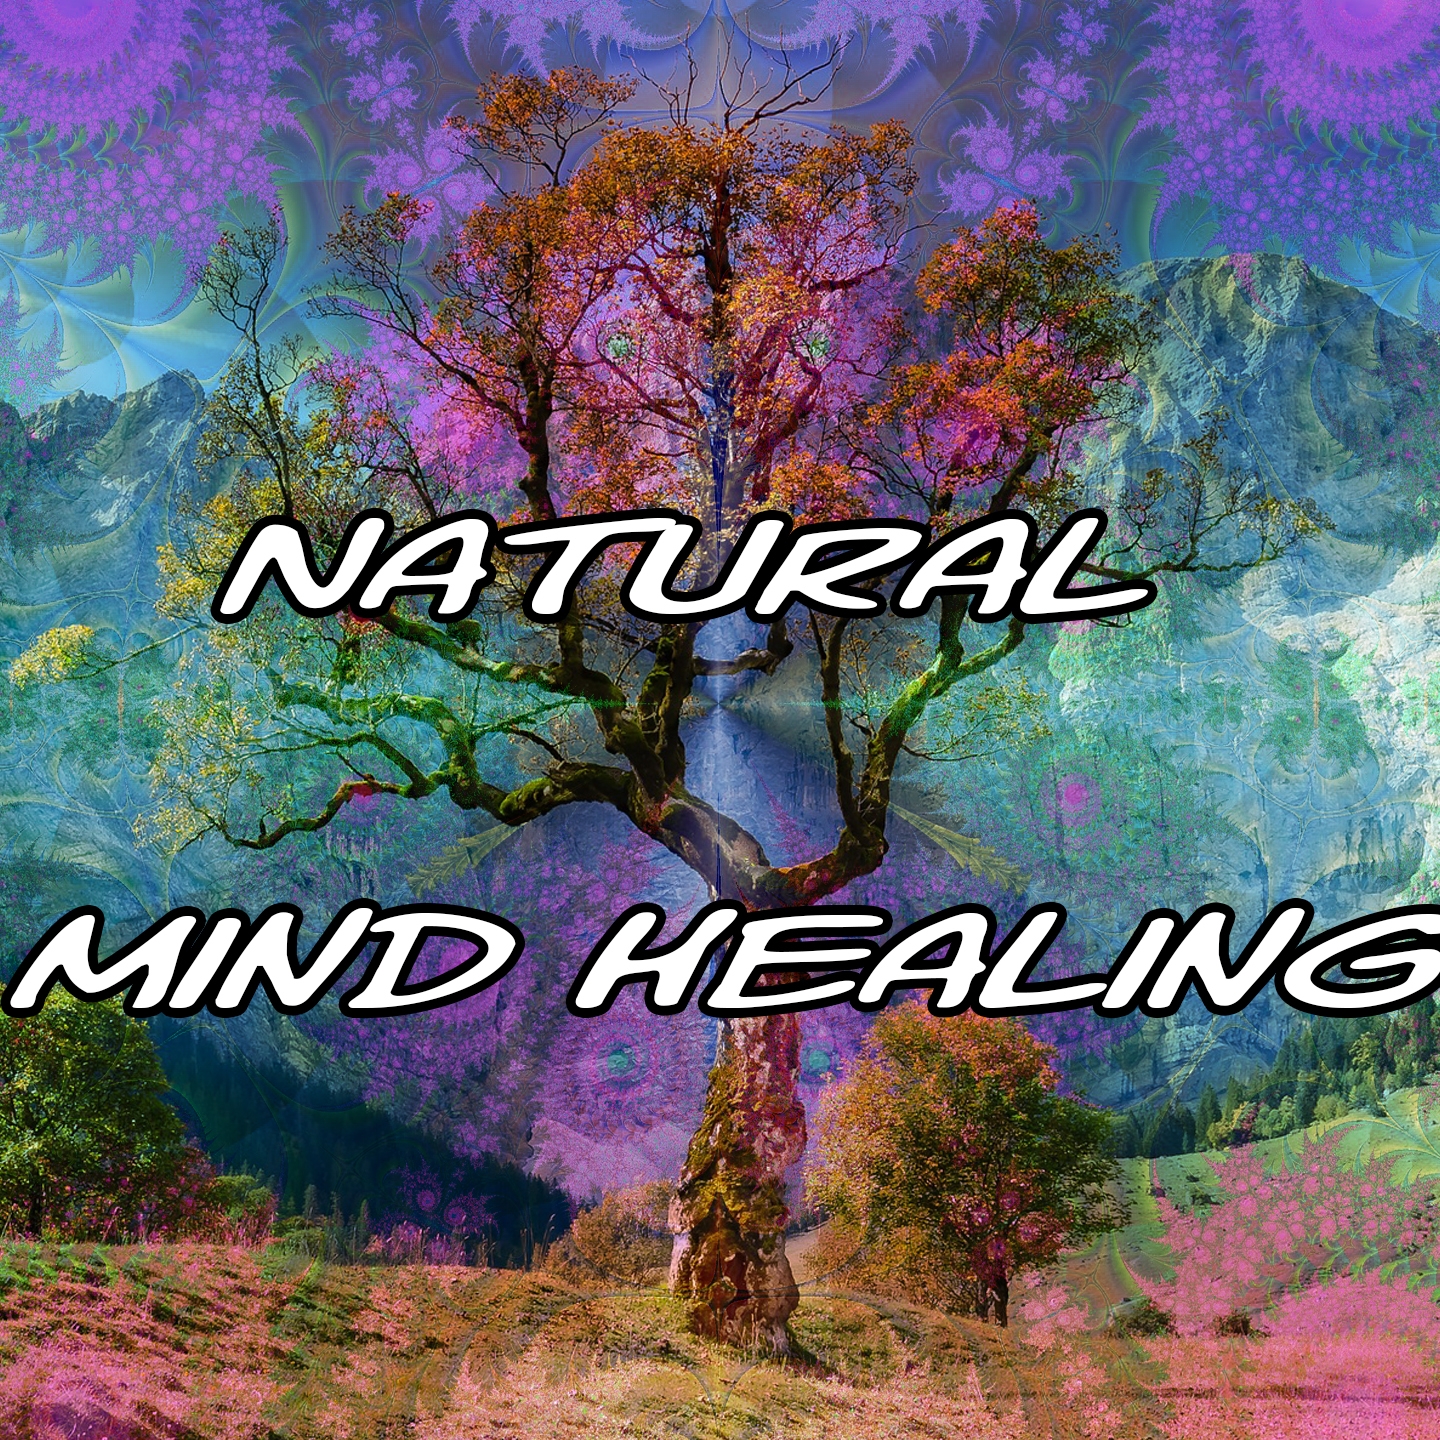 Natural Mind Healing